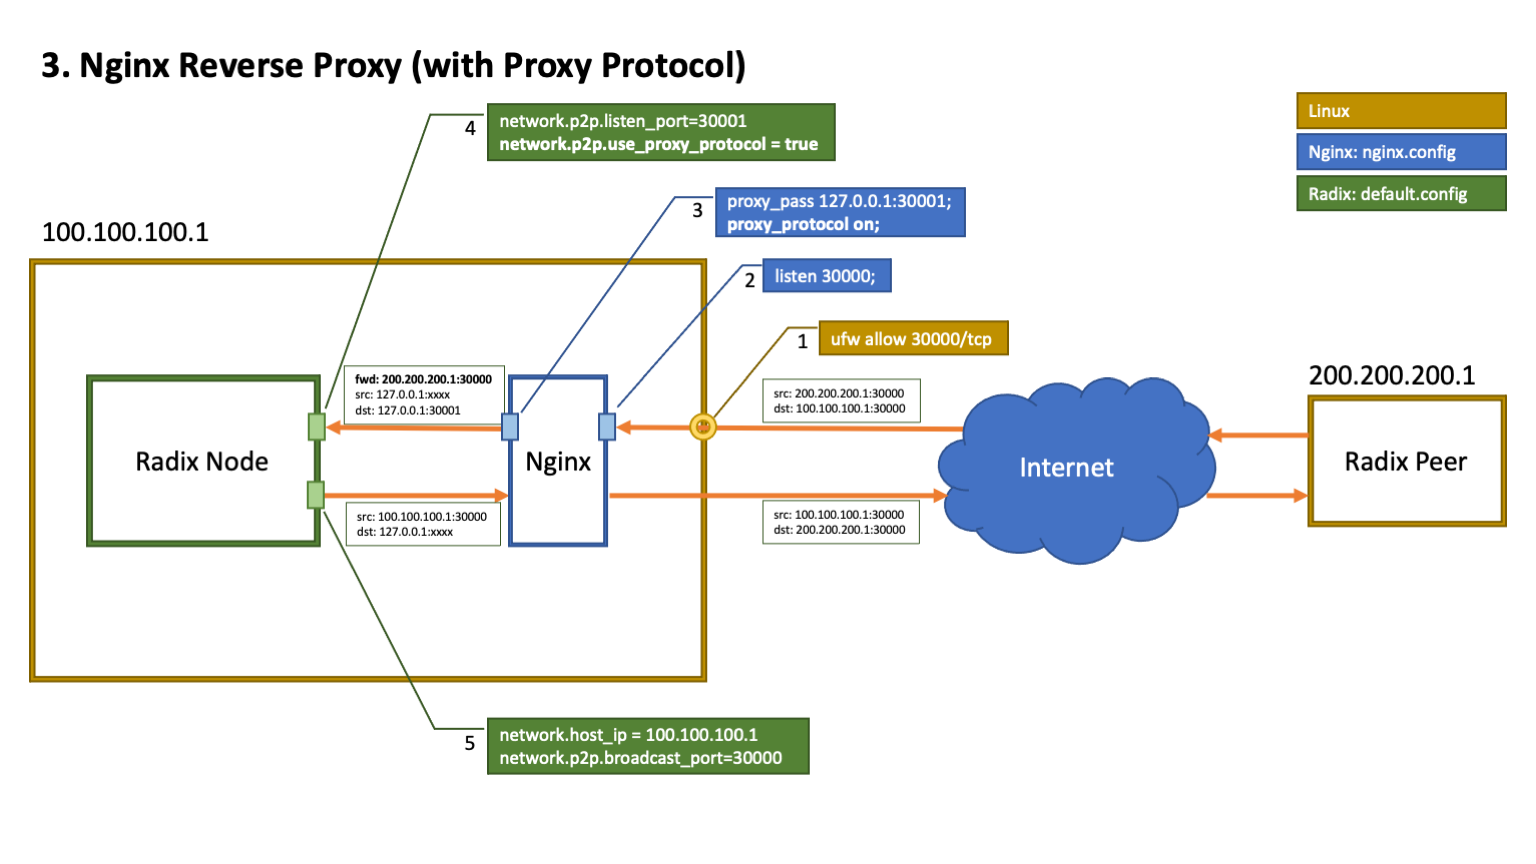 Reverse Proxy with Proxy Protocol